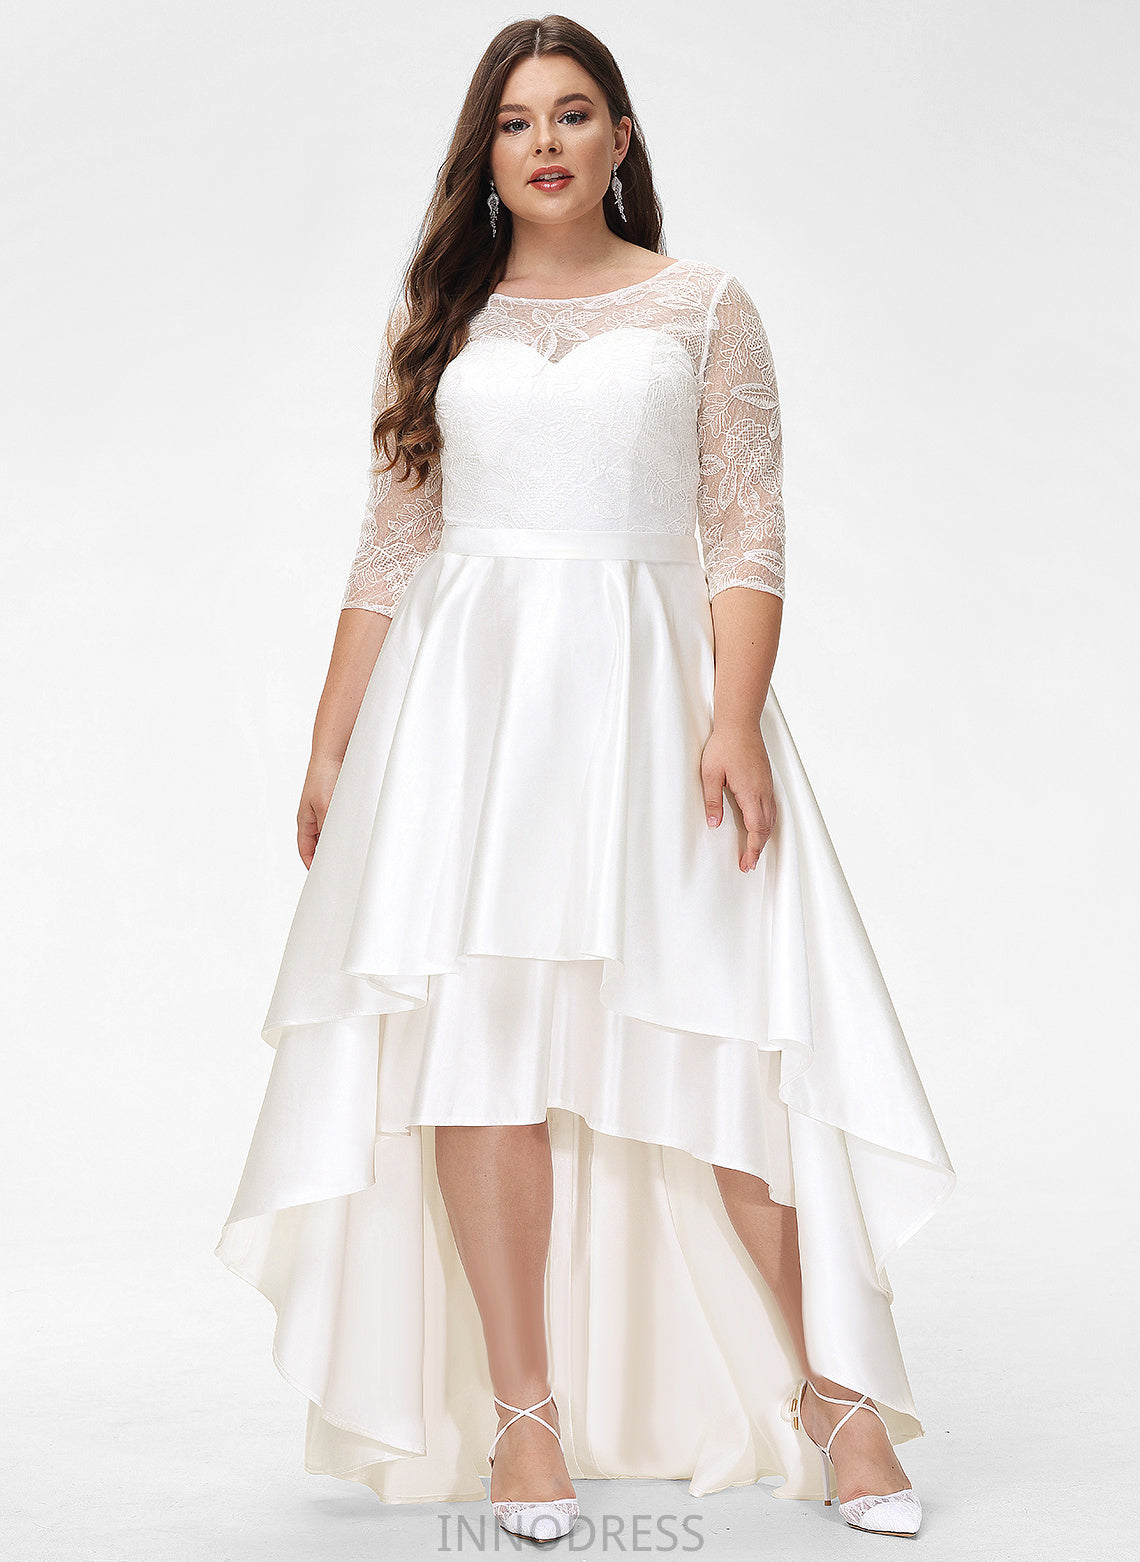 Joanna Wedding Scoop Asymmetrical Dress Satin Lace Wedding Dresses A-Line